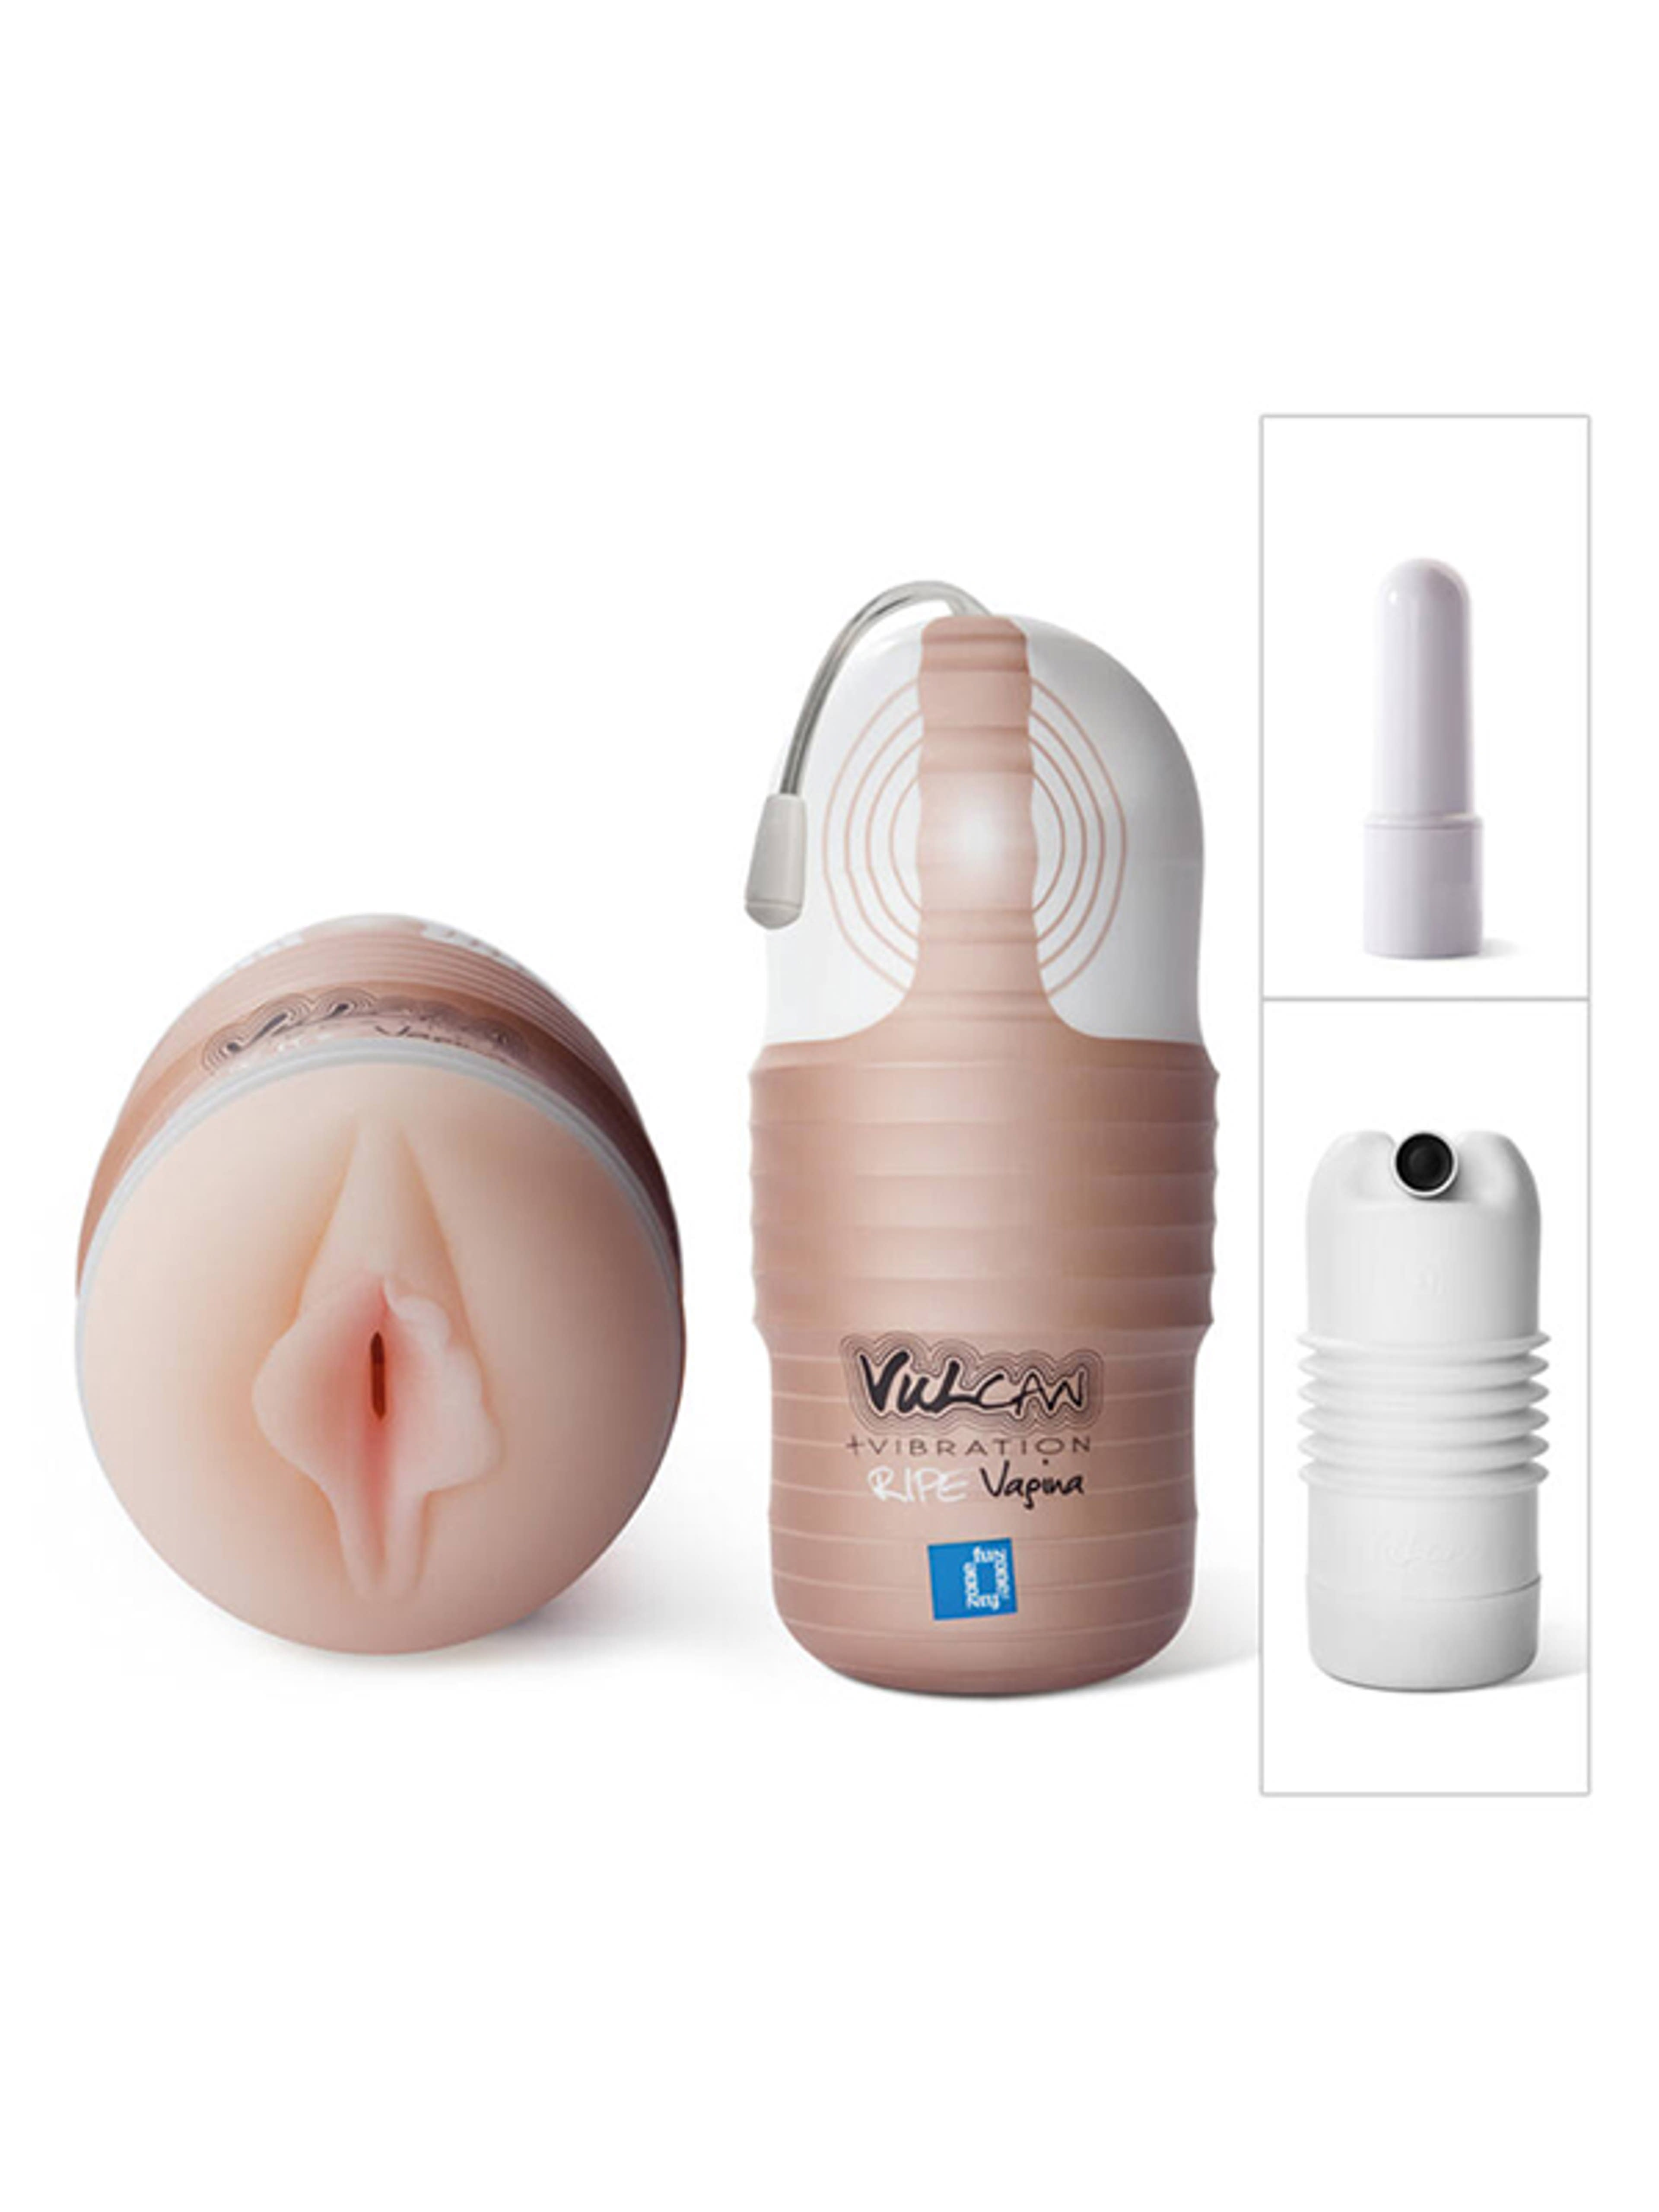 Vulcan vibráló natúr vagina - 1 db